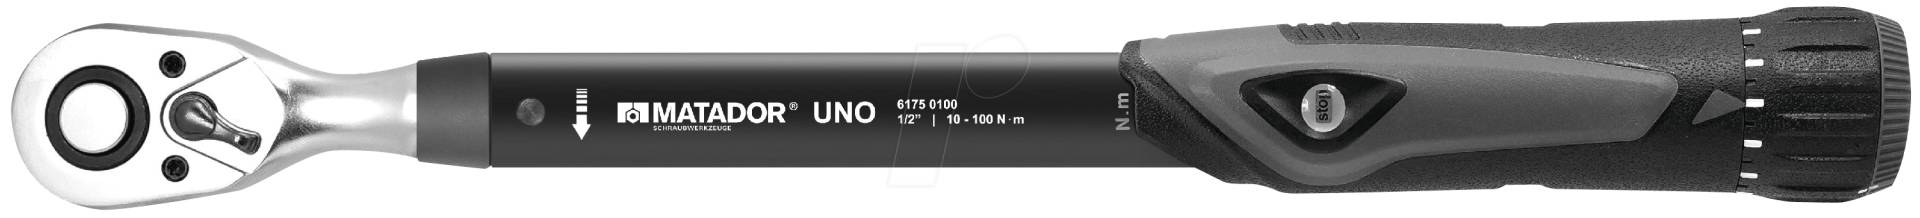 MAT 6175 0100 - Drehmomentschlüssel, 20-100 Nm, 1/2´´, Uno von Matador